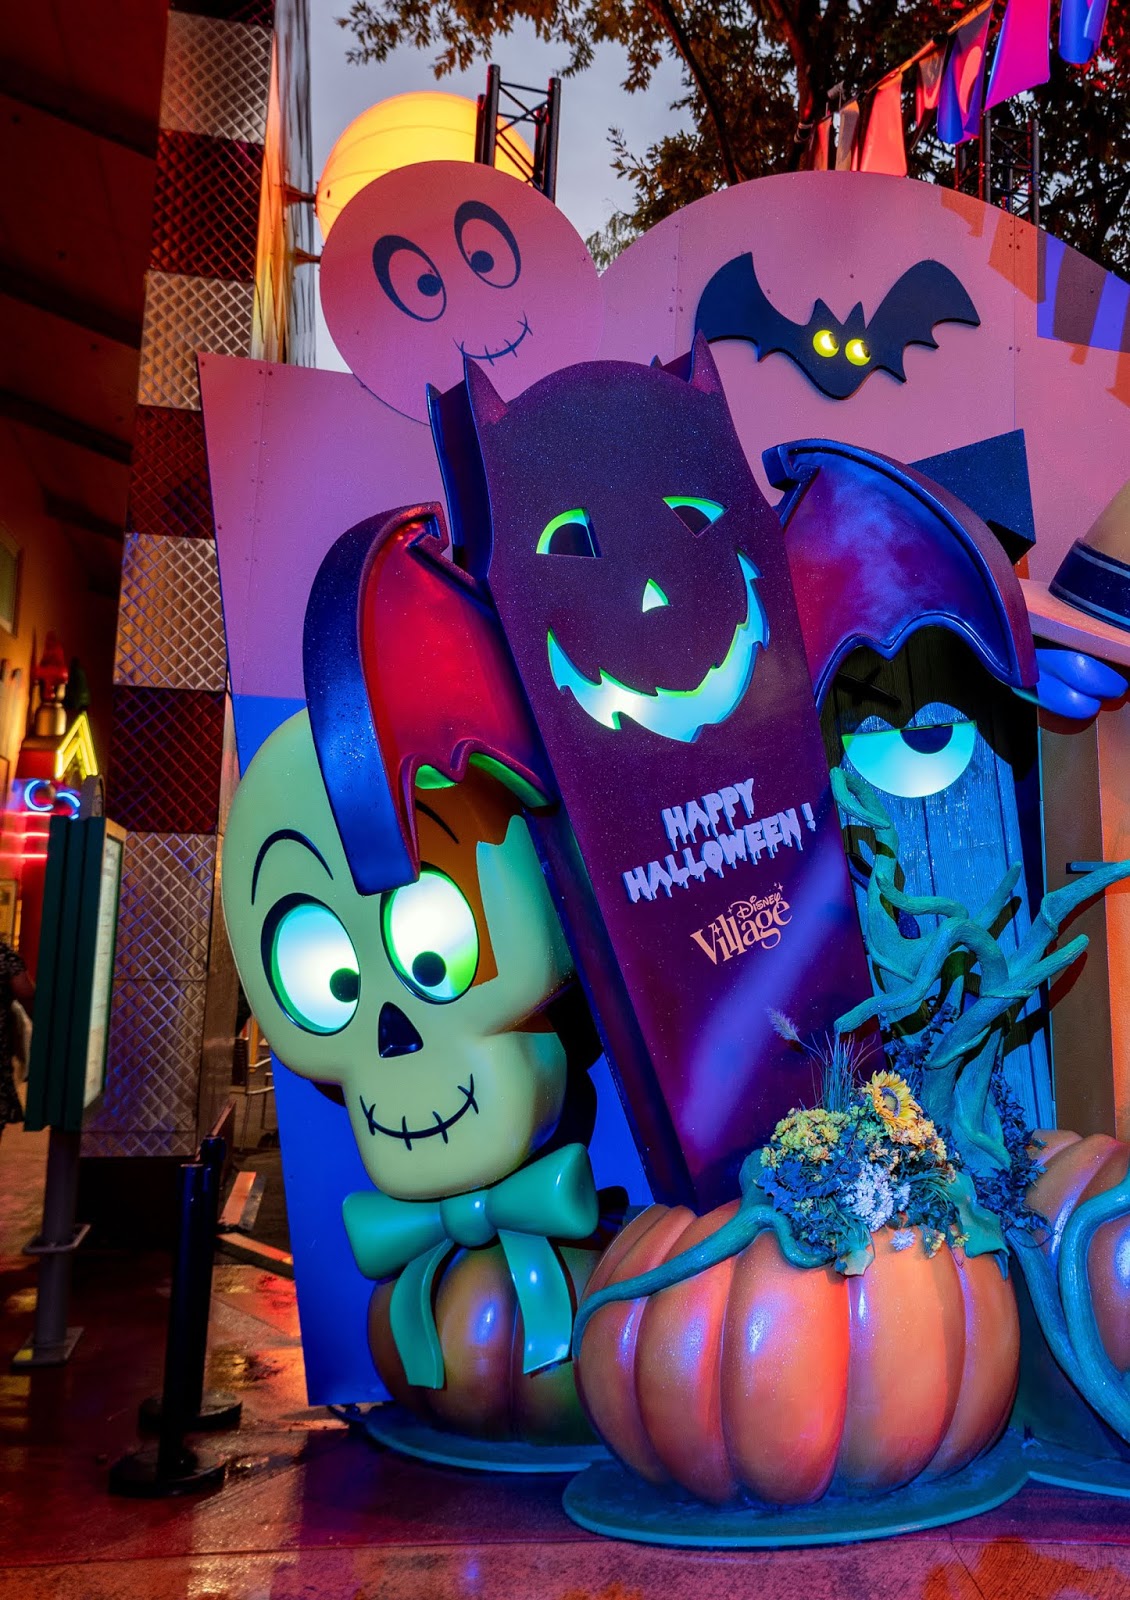 Halloween decorations in the Disney Village, Disneyland Paris